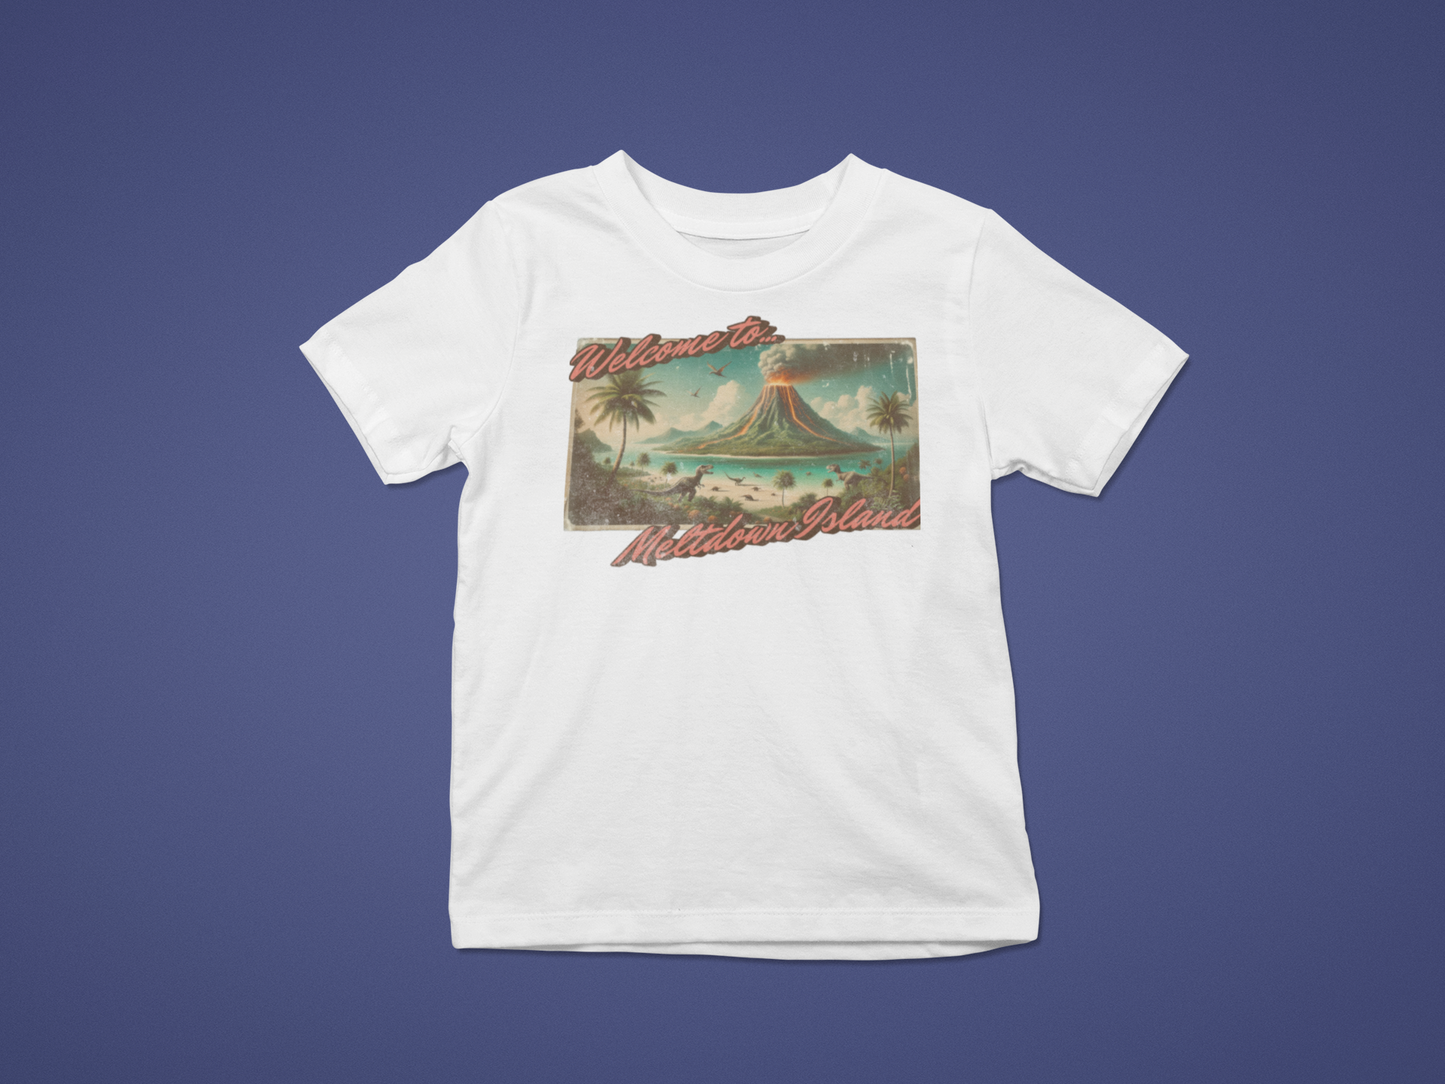 Meltdown Island Toddler T-Shirt